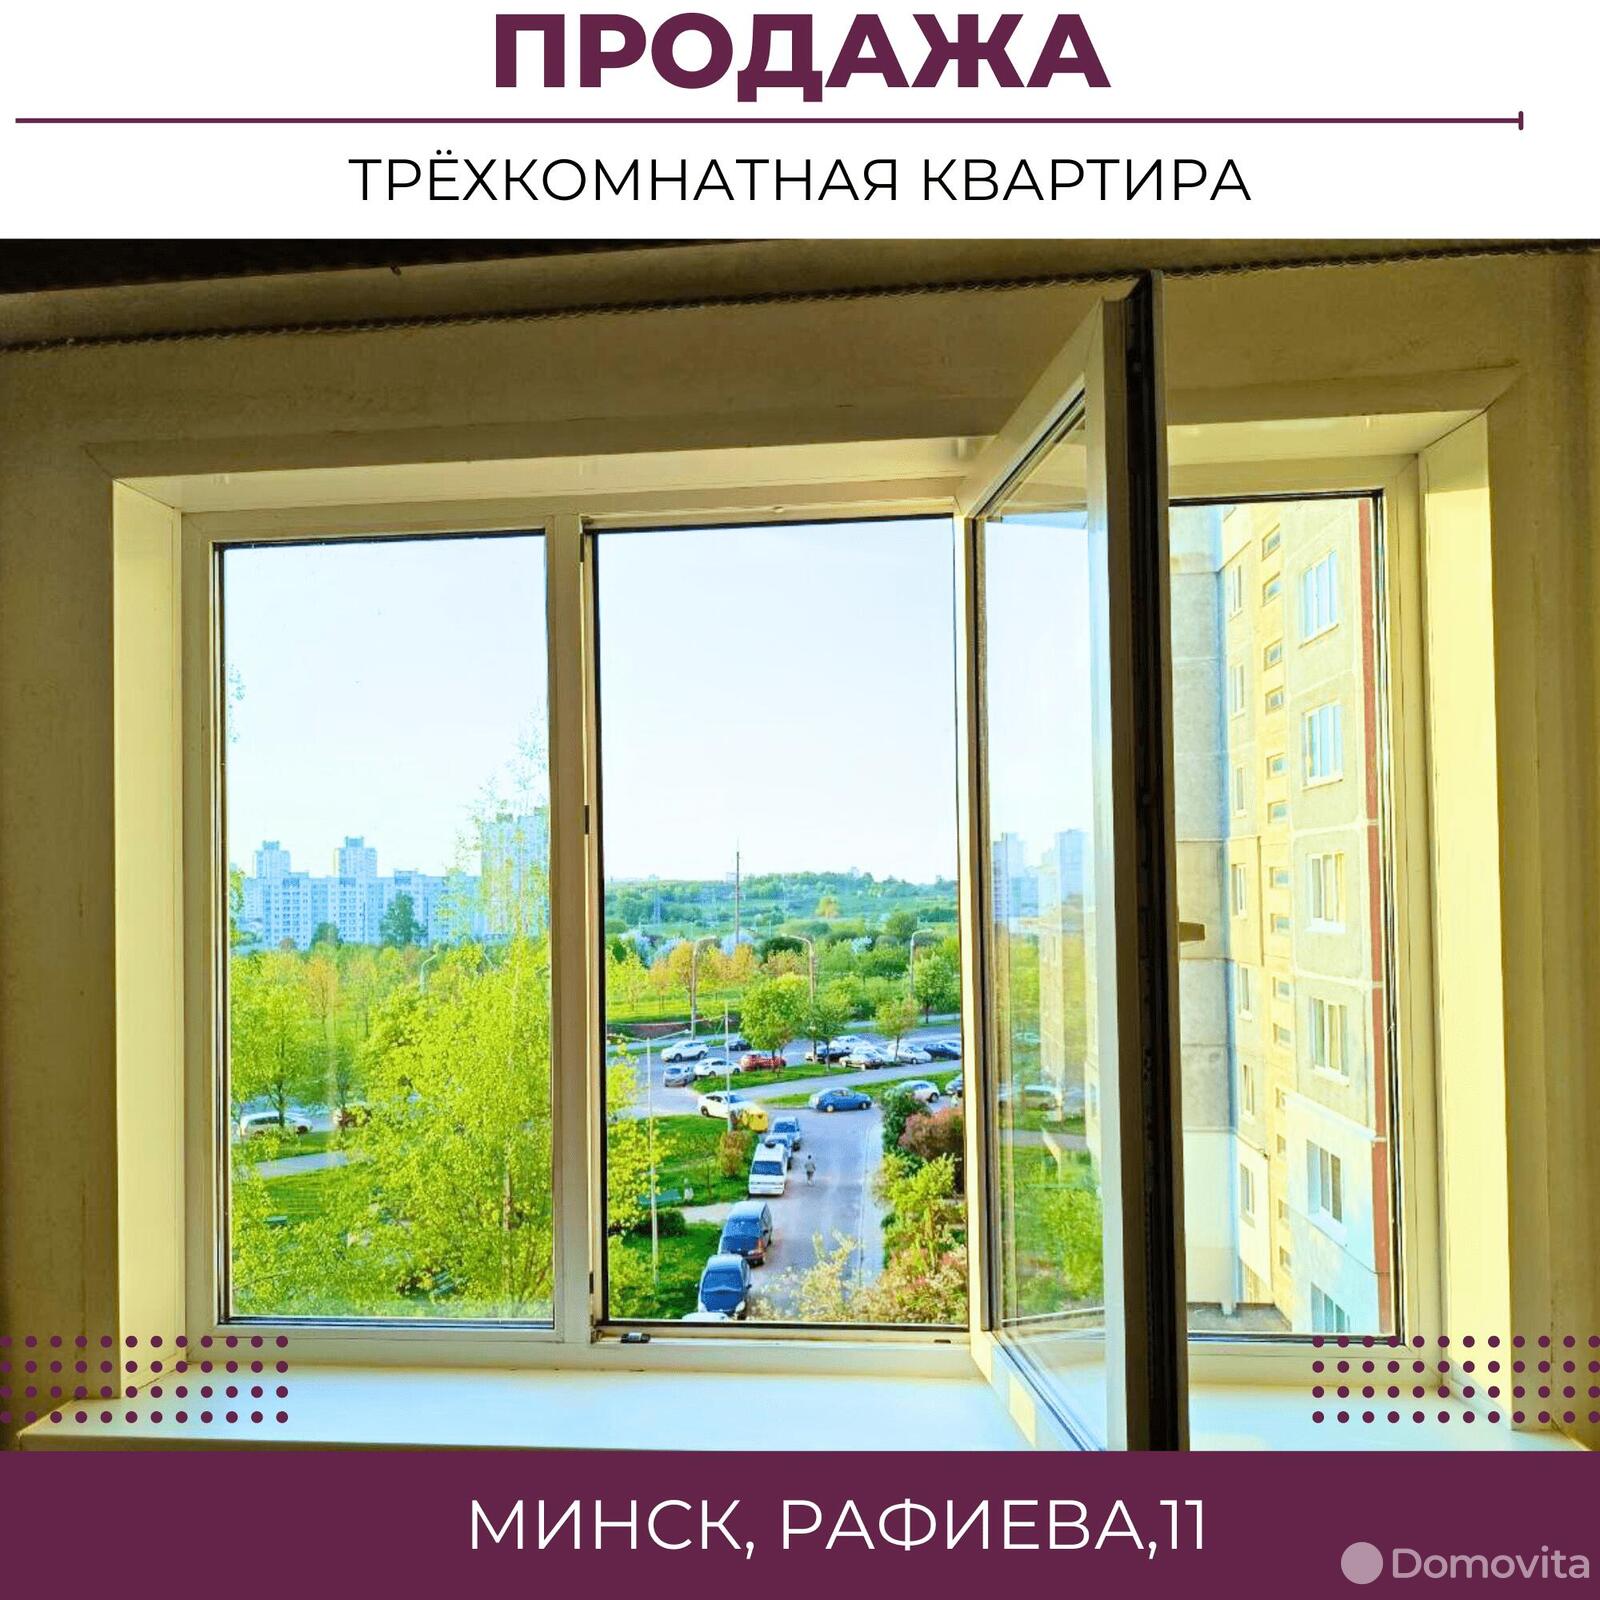 продажа квартиры, Минск, ул. Рафиева, д. 11